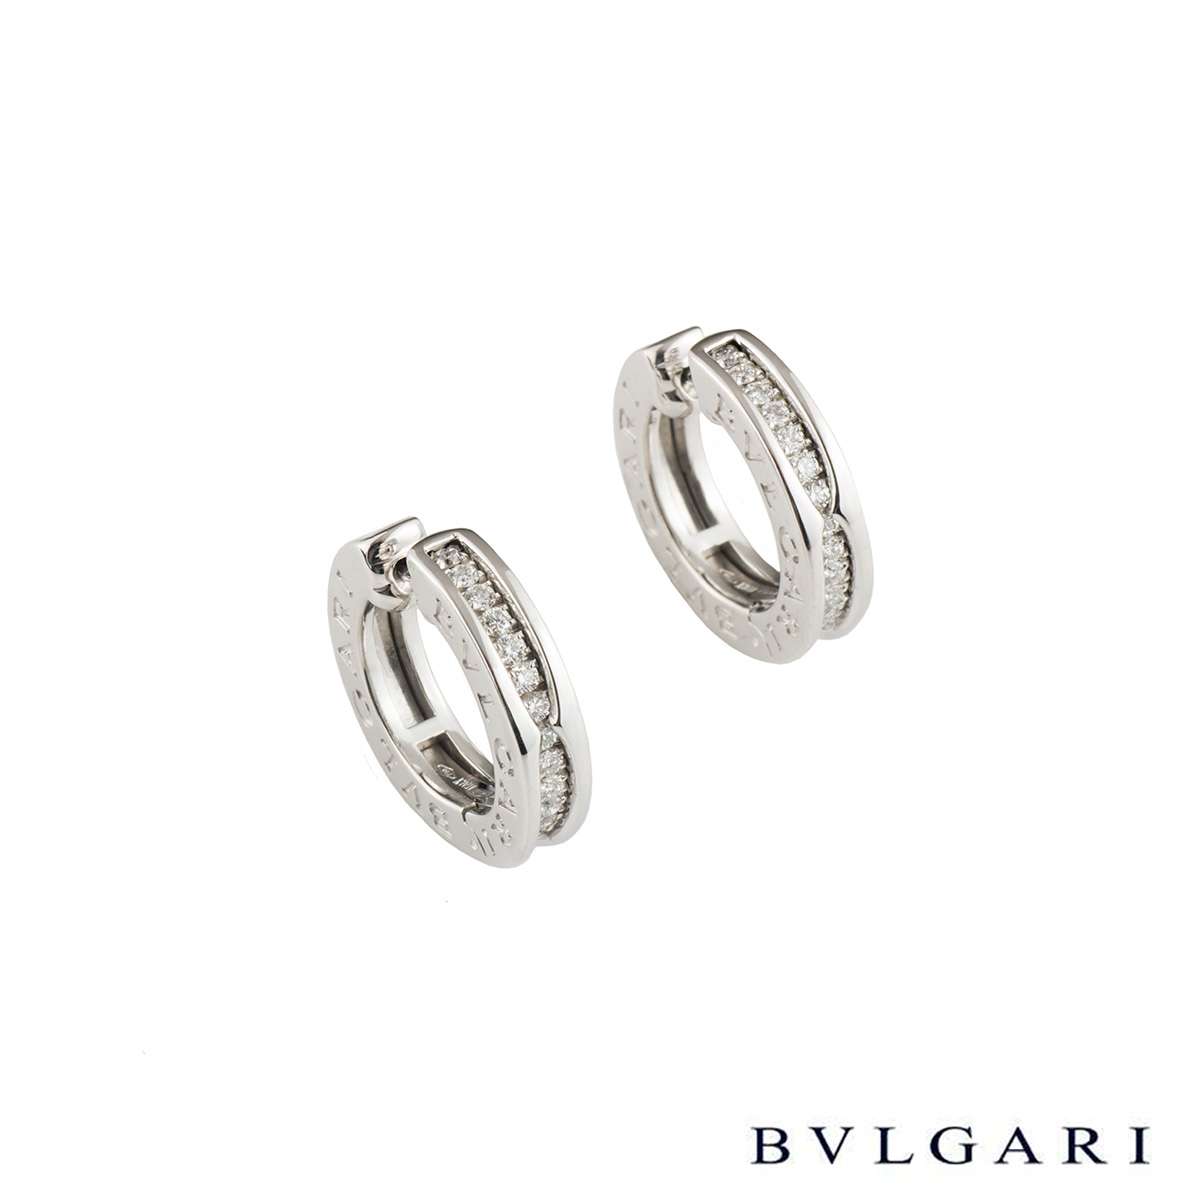 bvlgari earrings with diamonds